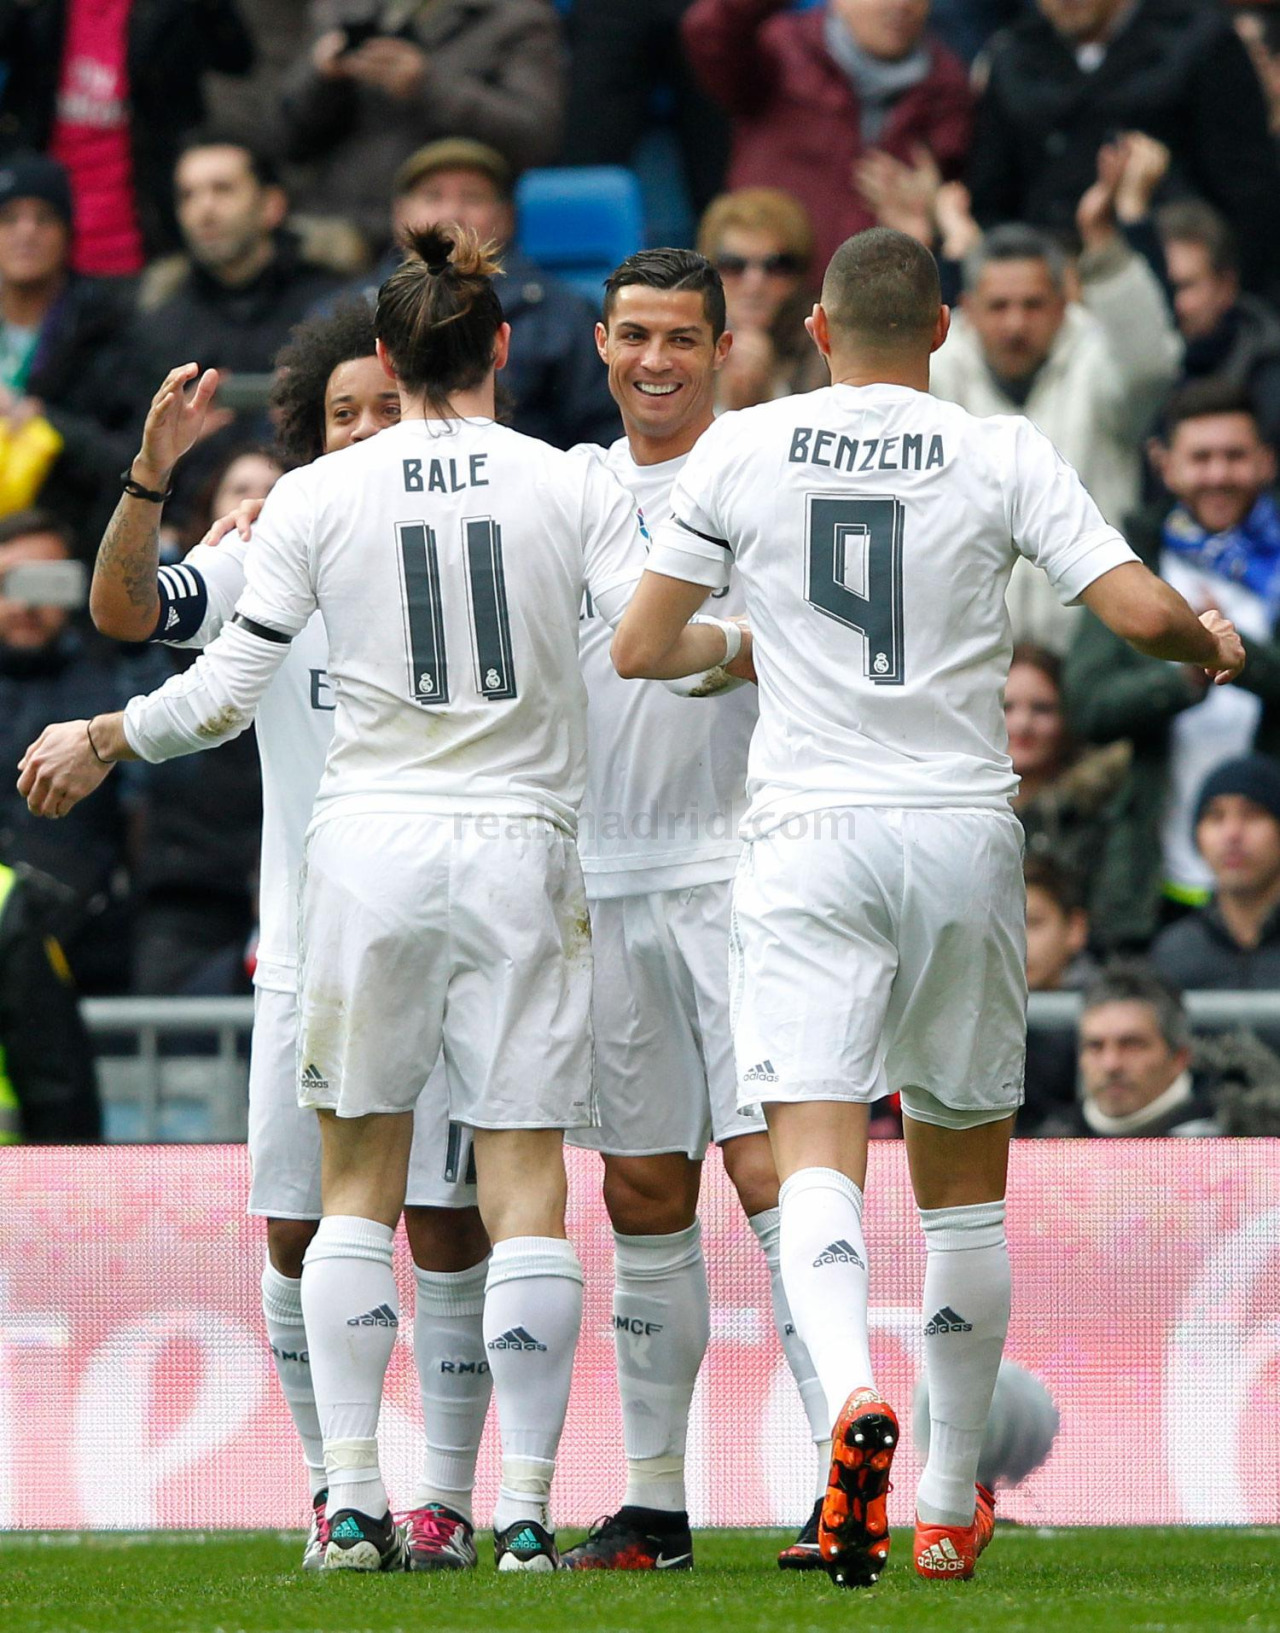 Cristianio, Benzema y Bale celebran un gol